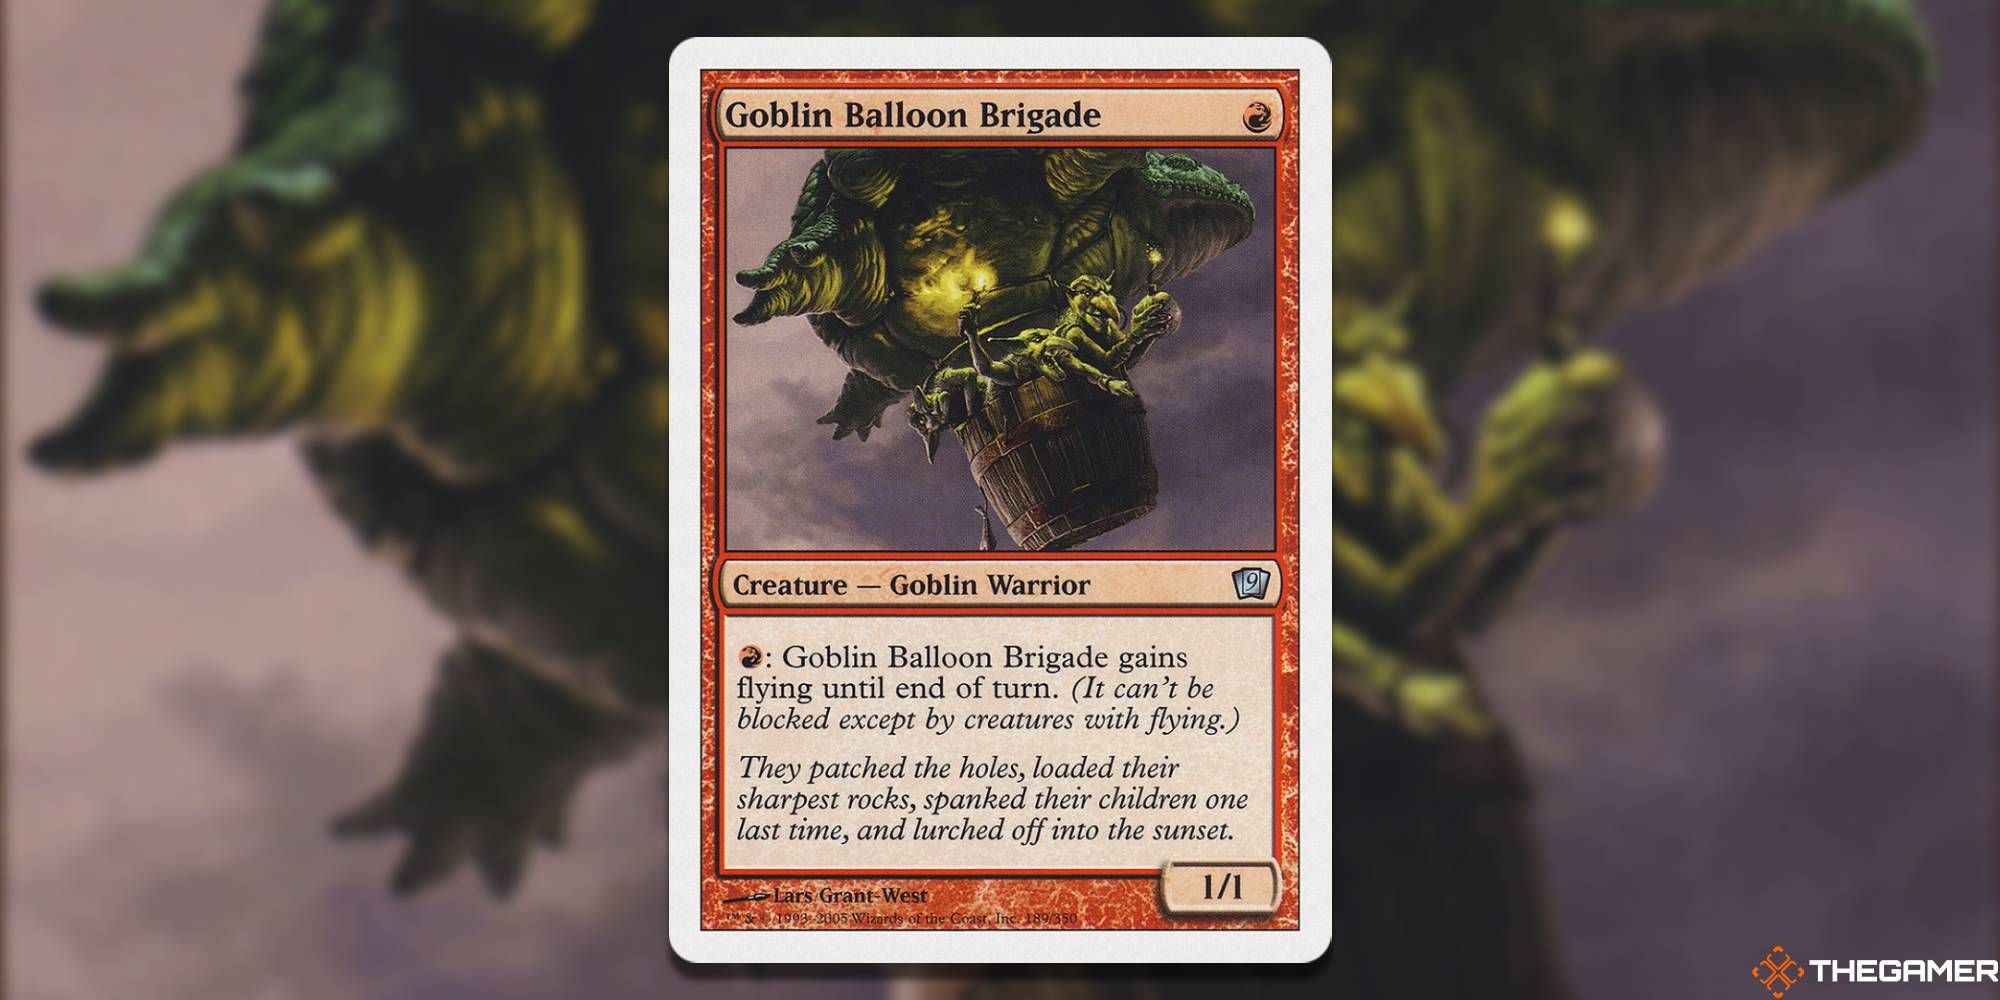 Goblin Balloon Brigade by Lars Grant-West - MTG Funny Flavor